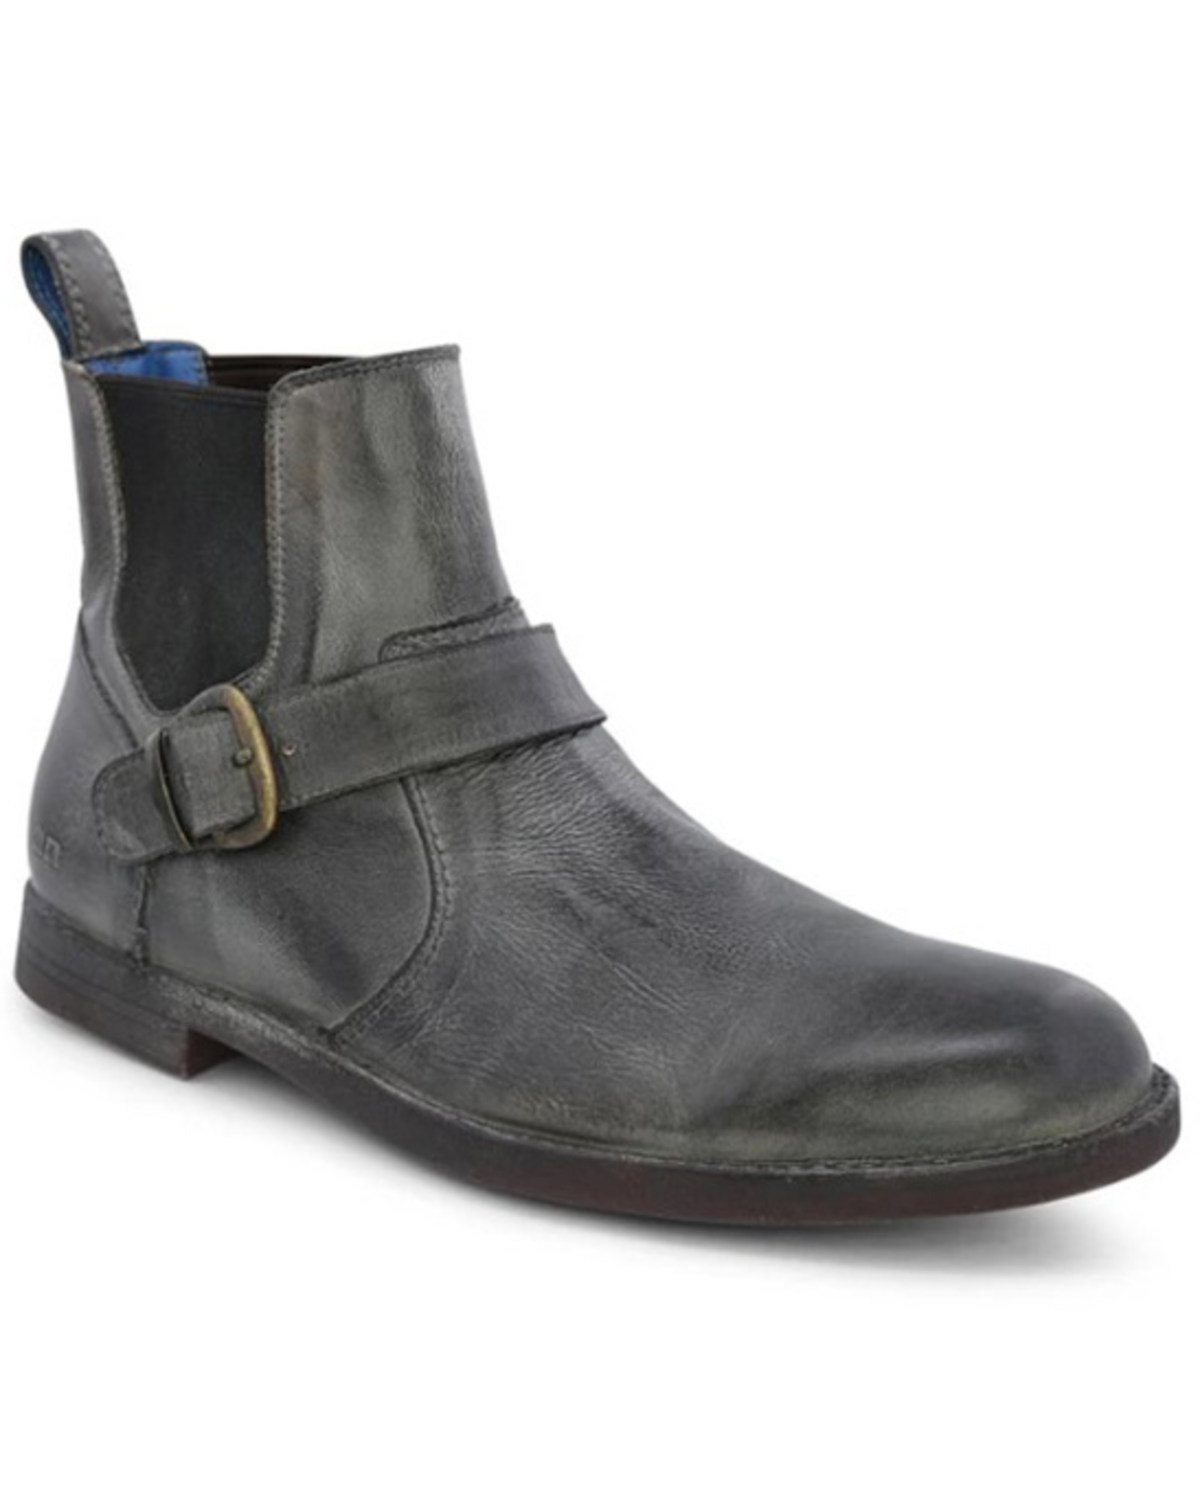 Bed Stu Men's Michelangelo Side Buckle Chelsea Boots - Round Toe